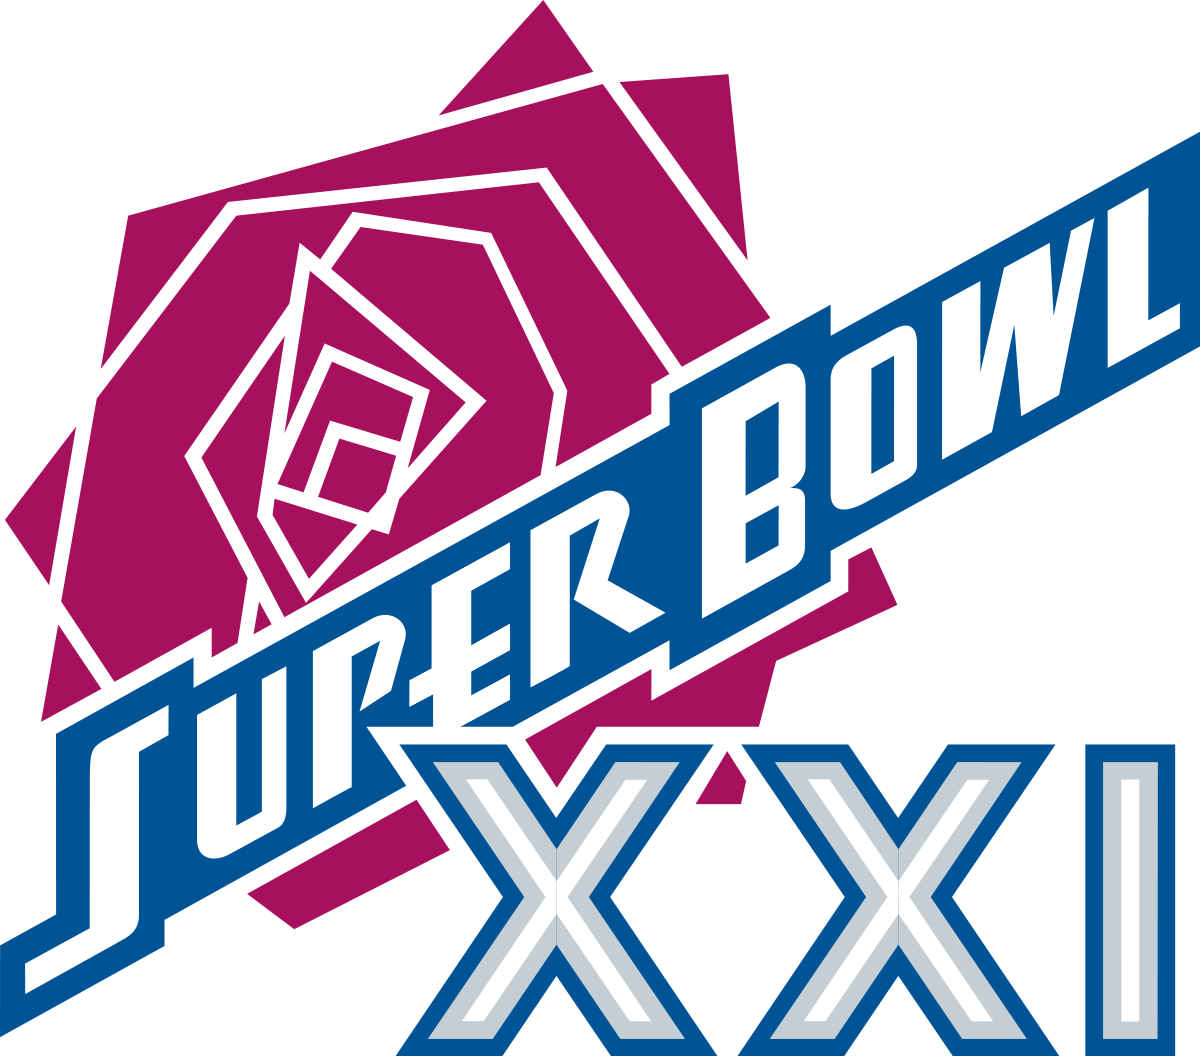 XXI Logo - Super Bowl XXI